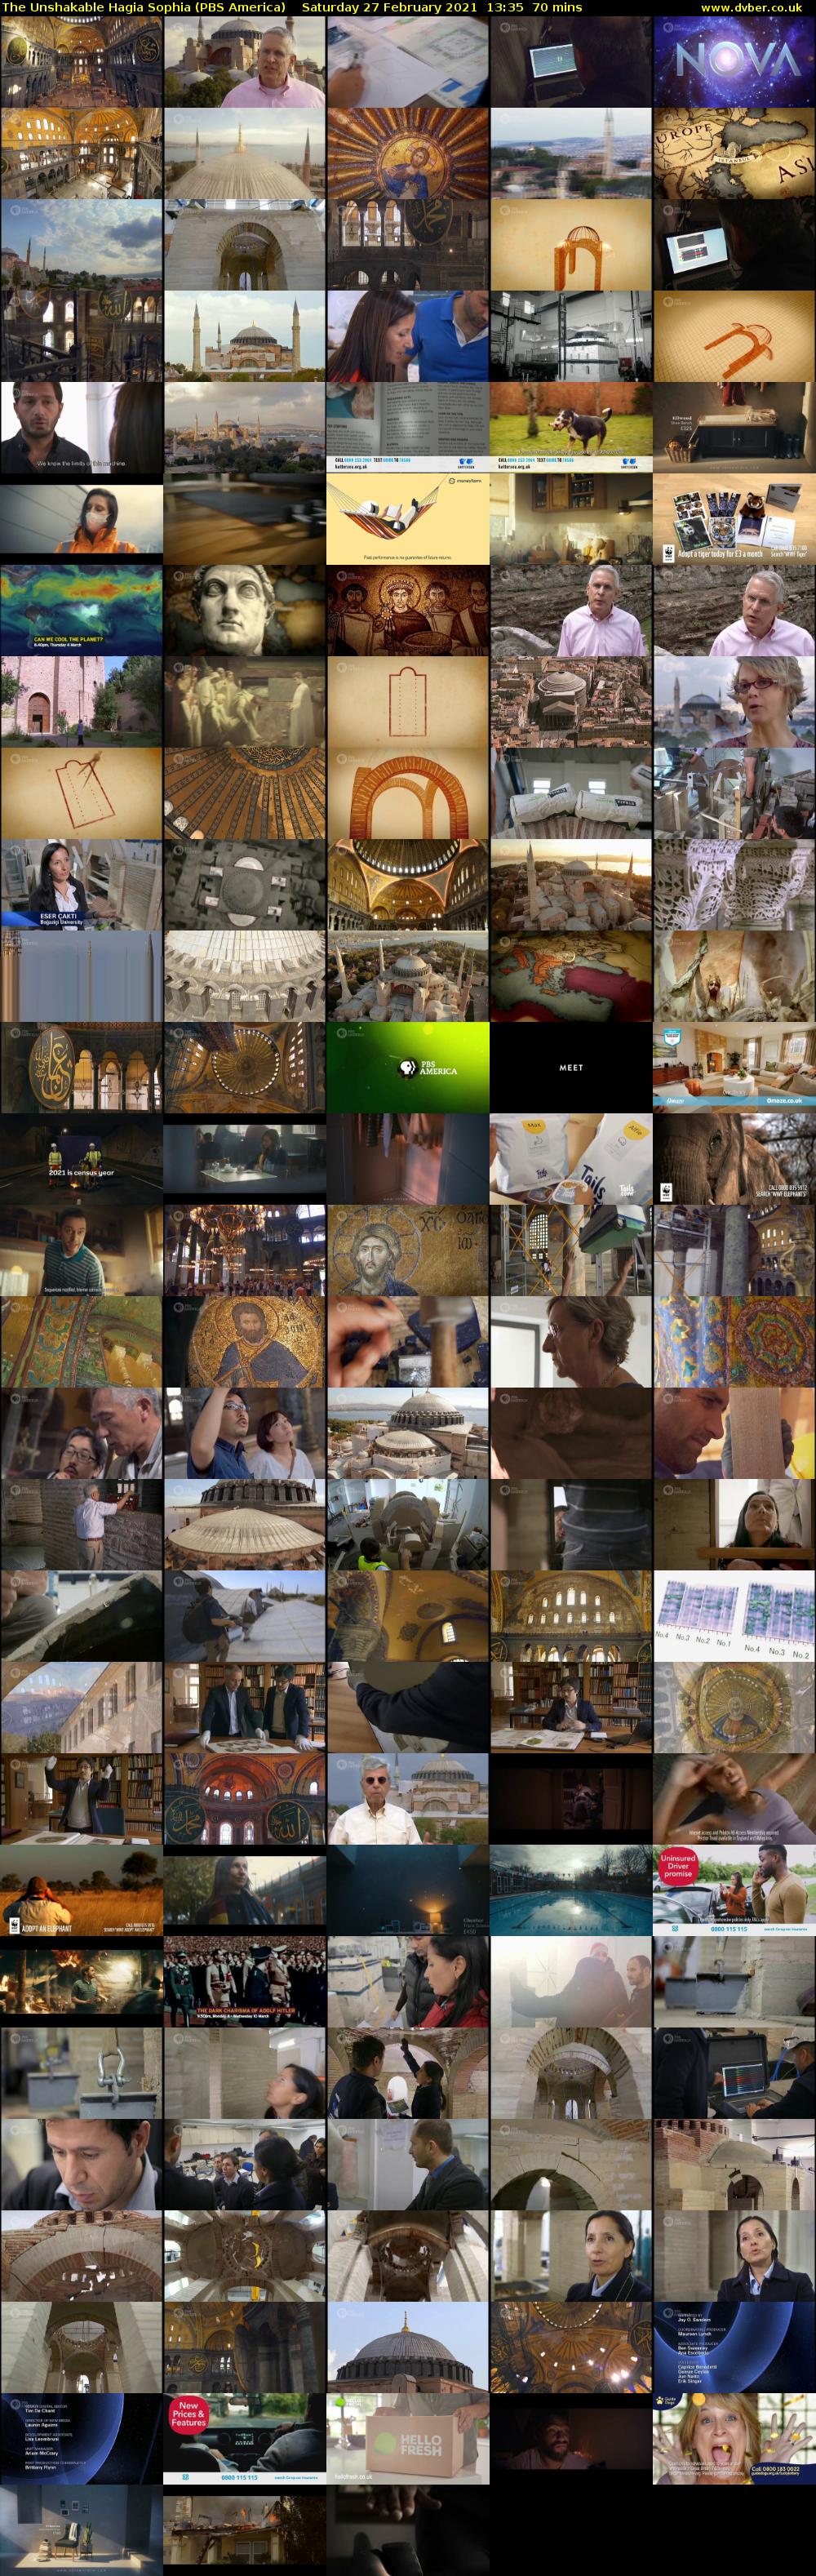 The Unshakable Hagia Sophia (PBS America) Saturday 27 February 2021 13:35 - 14:45